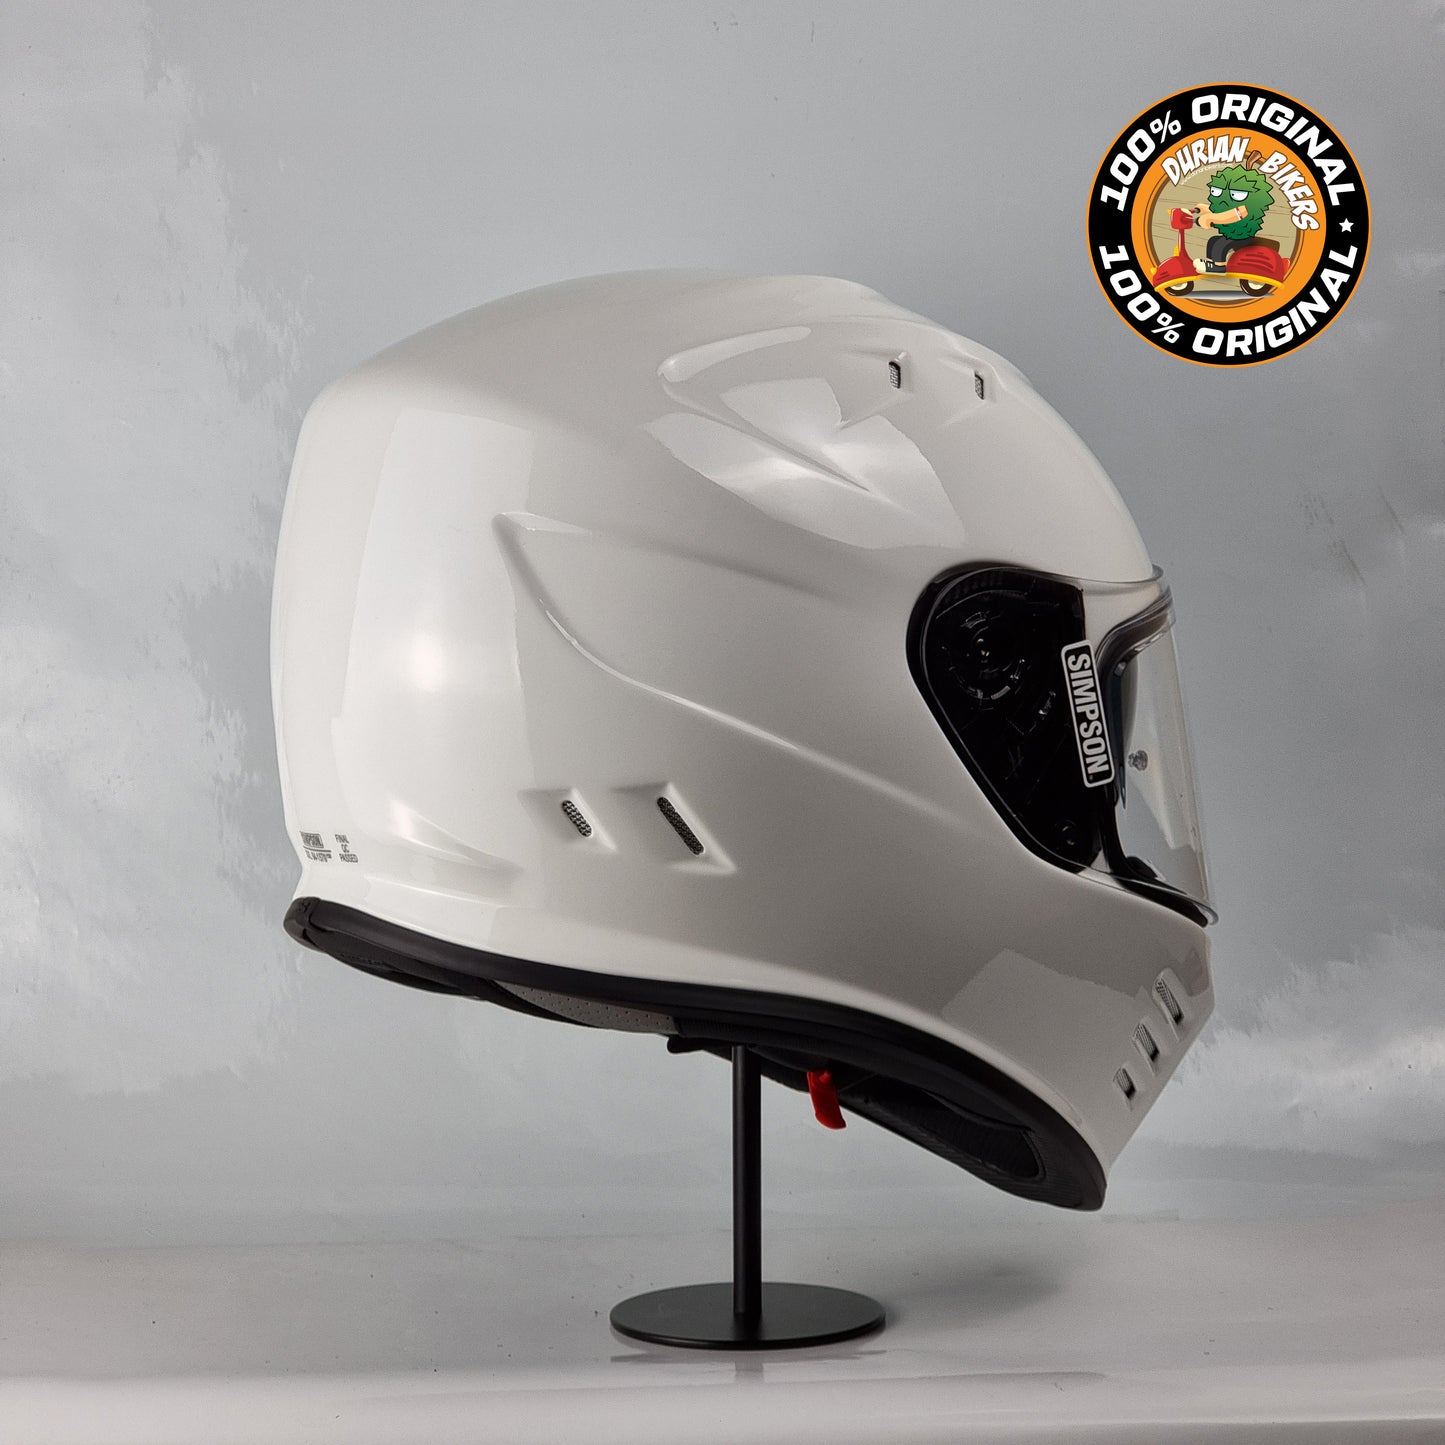 Simpson Helmet Venom Bandit (Gloss White)